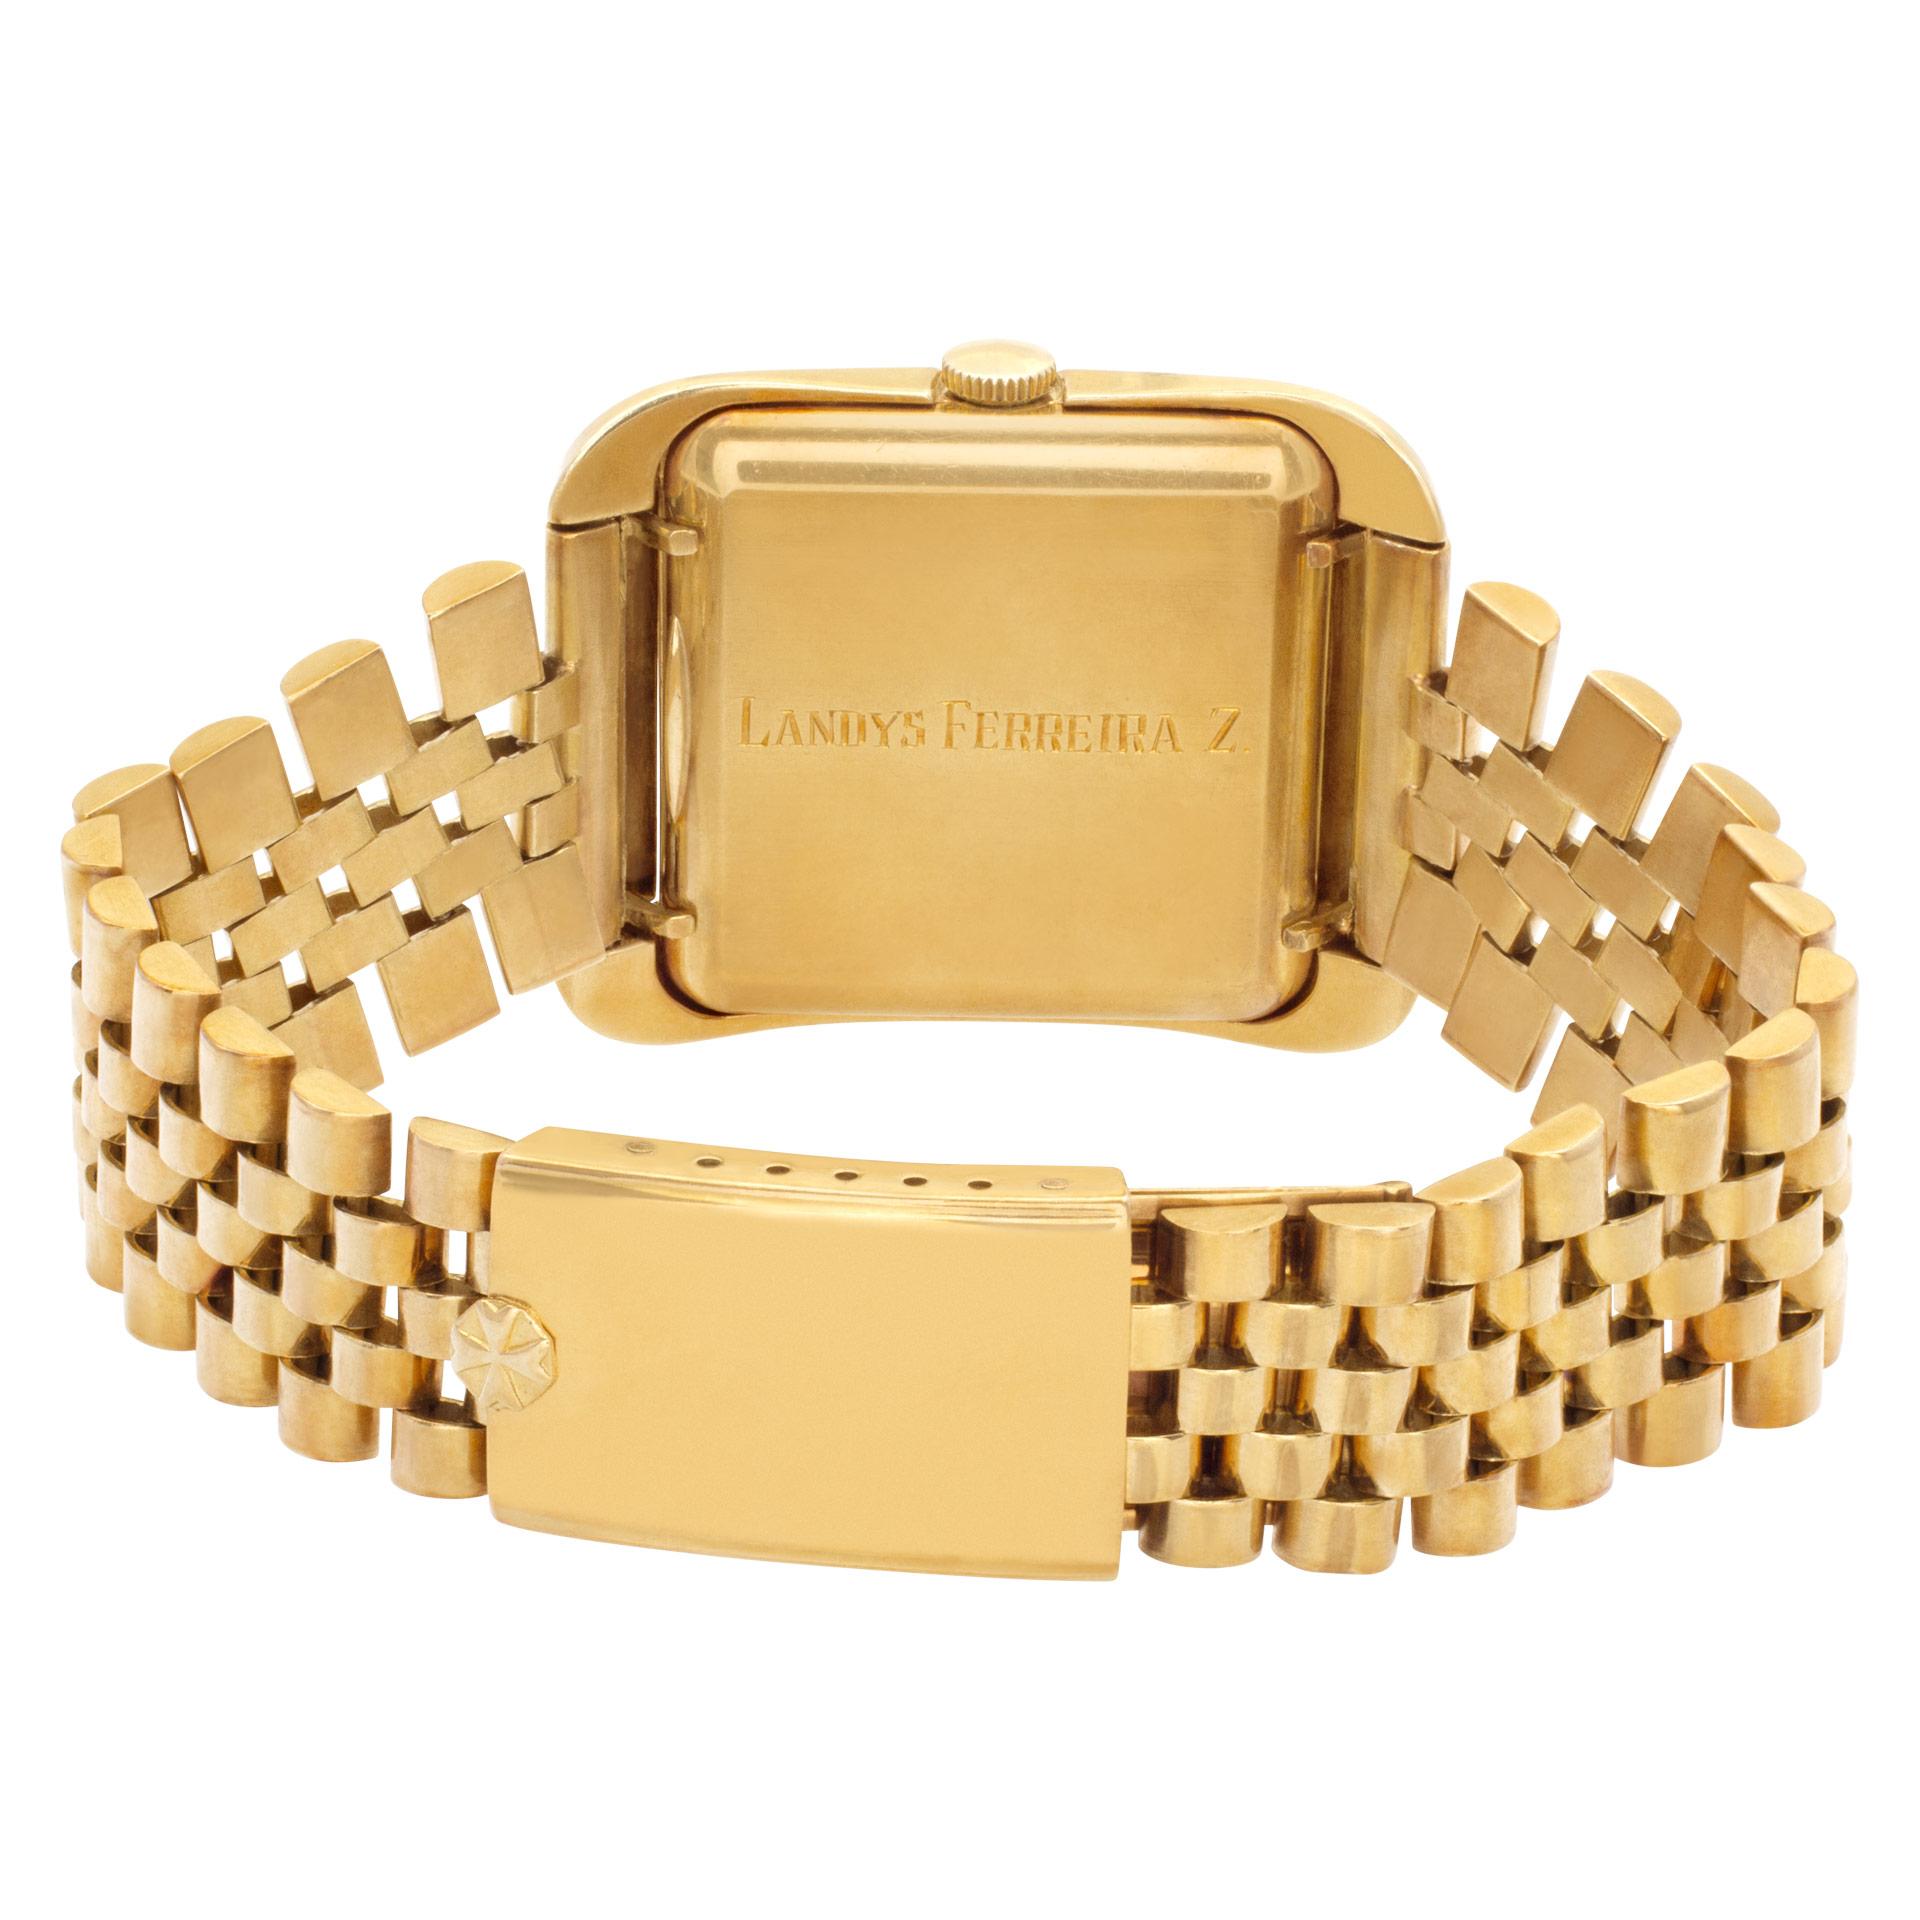 vacheron constantin geneve 18k solid gold wrist watch